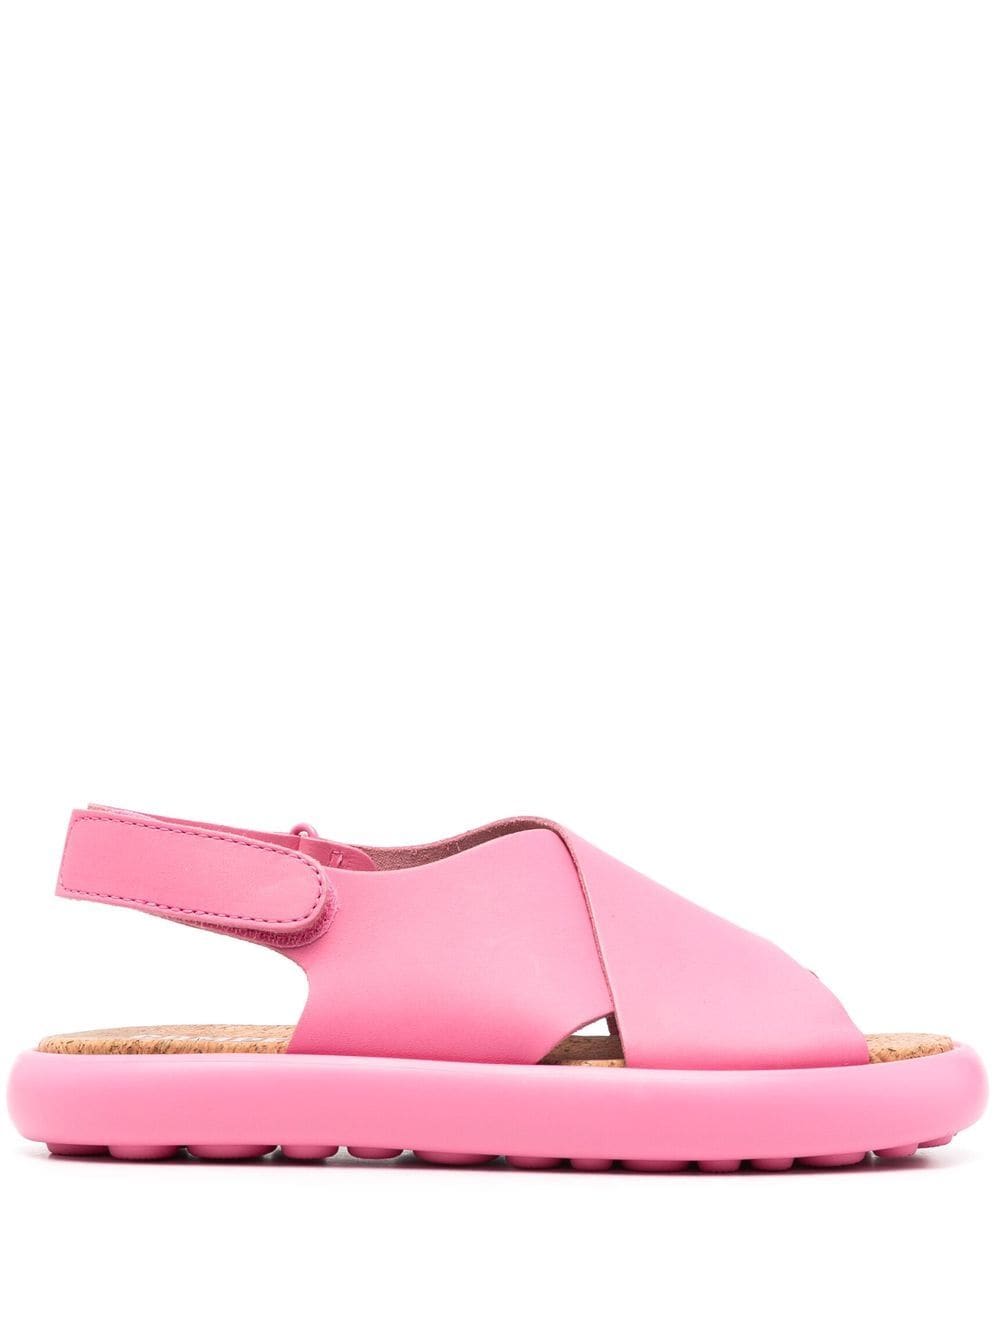 Camper Pelotas open toe sandals - Pink von Camper